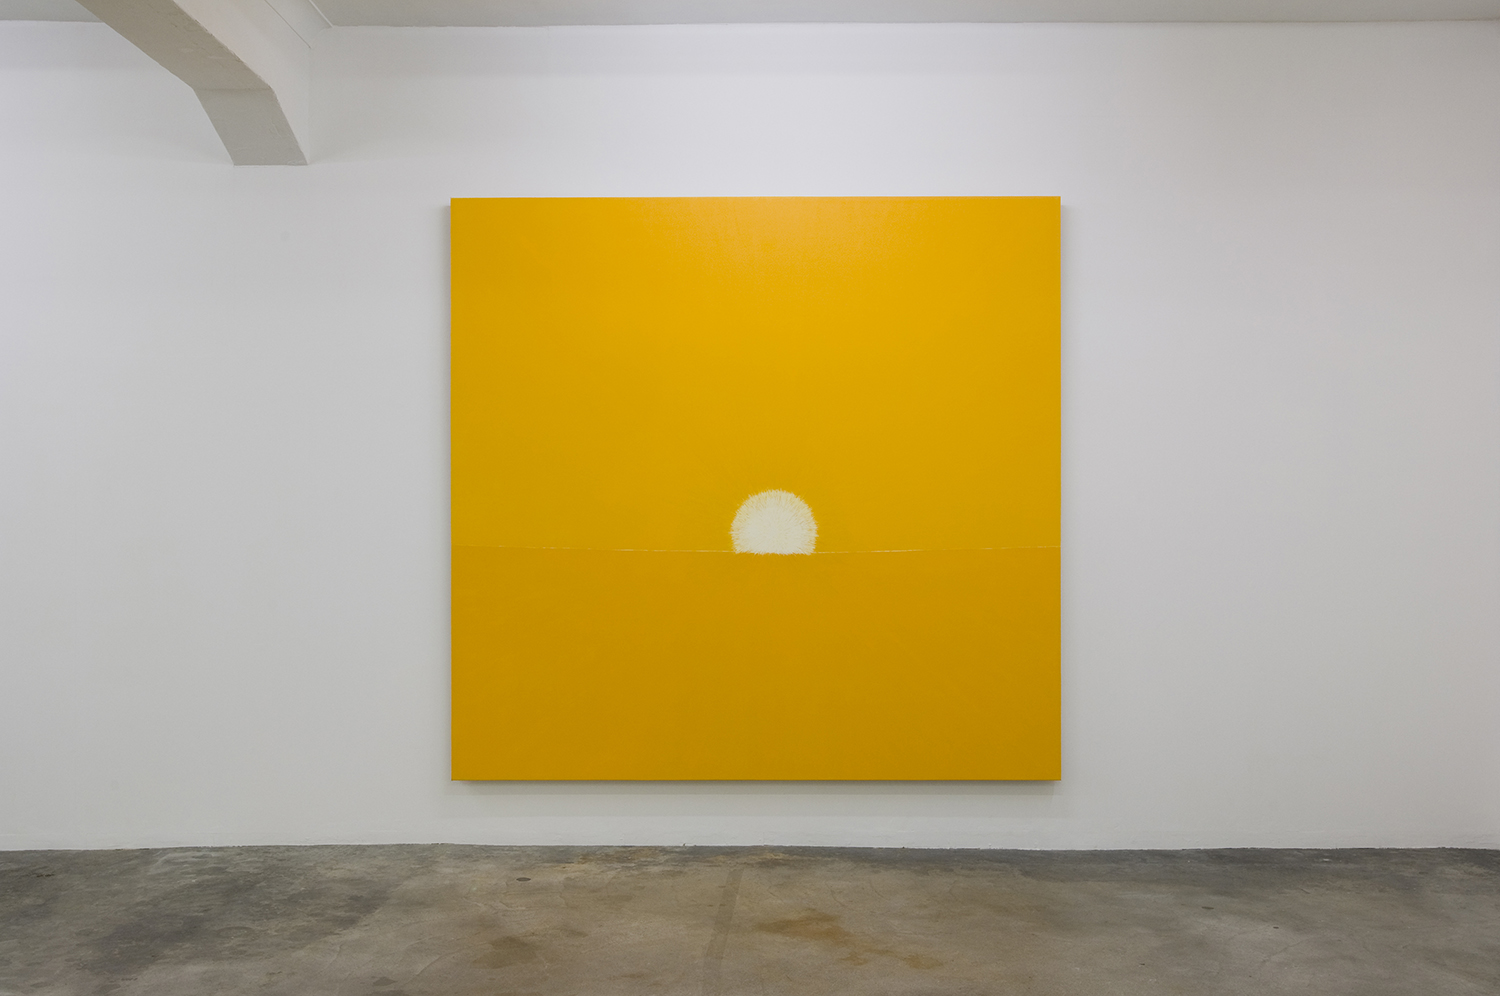  The rising sun 2008-11(01)｜oil on canvas｜220 x 230 cm｜2008<br>Price inquiry